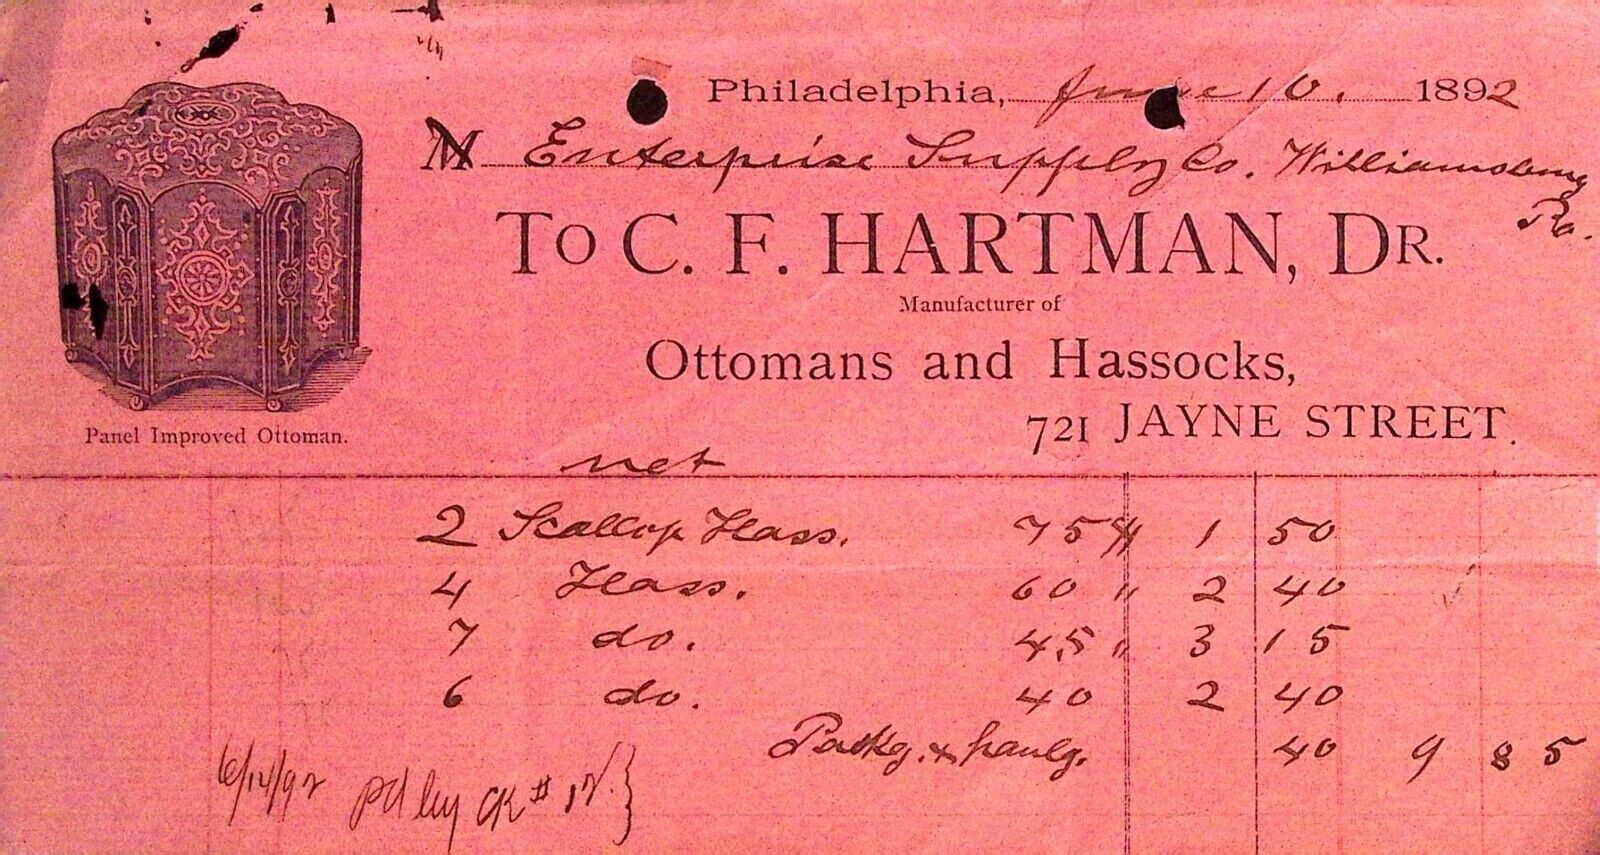 C.F. Hartman Dr. Ottomans and Hassocks 1892 Invoice Receipt Philadelphia PA